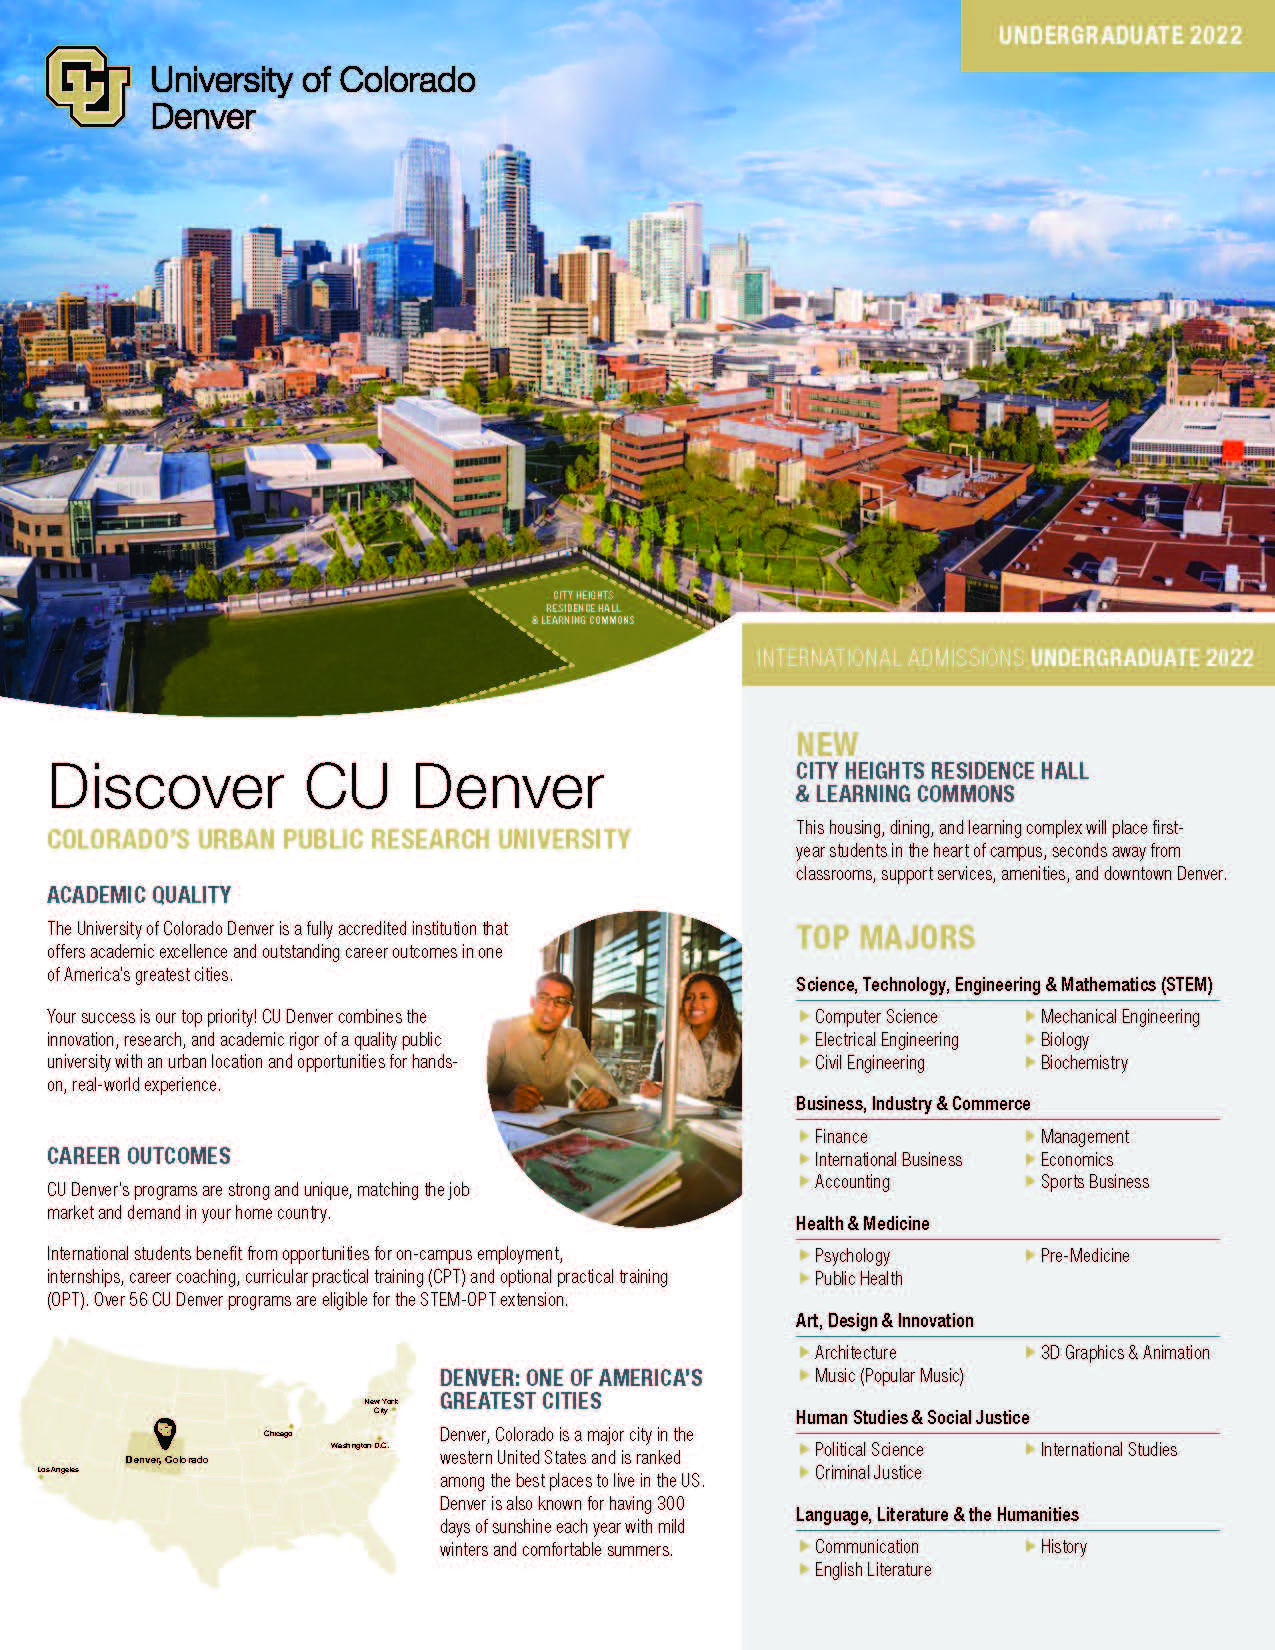 Discover CU Denver (Undergraduates)